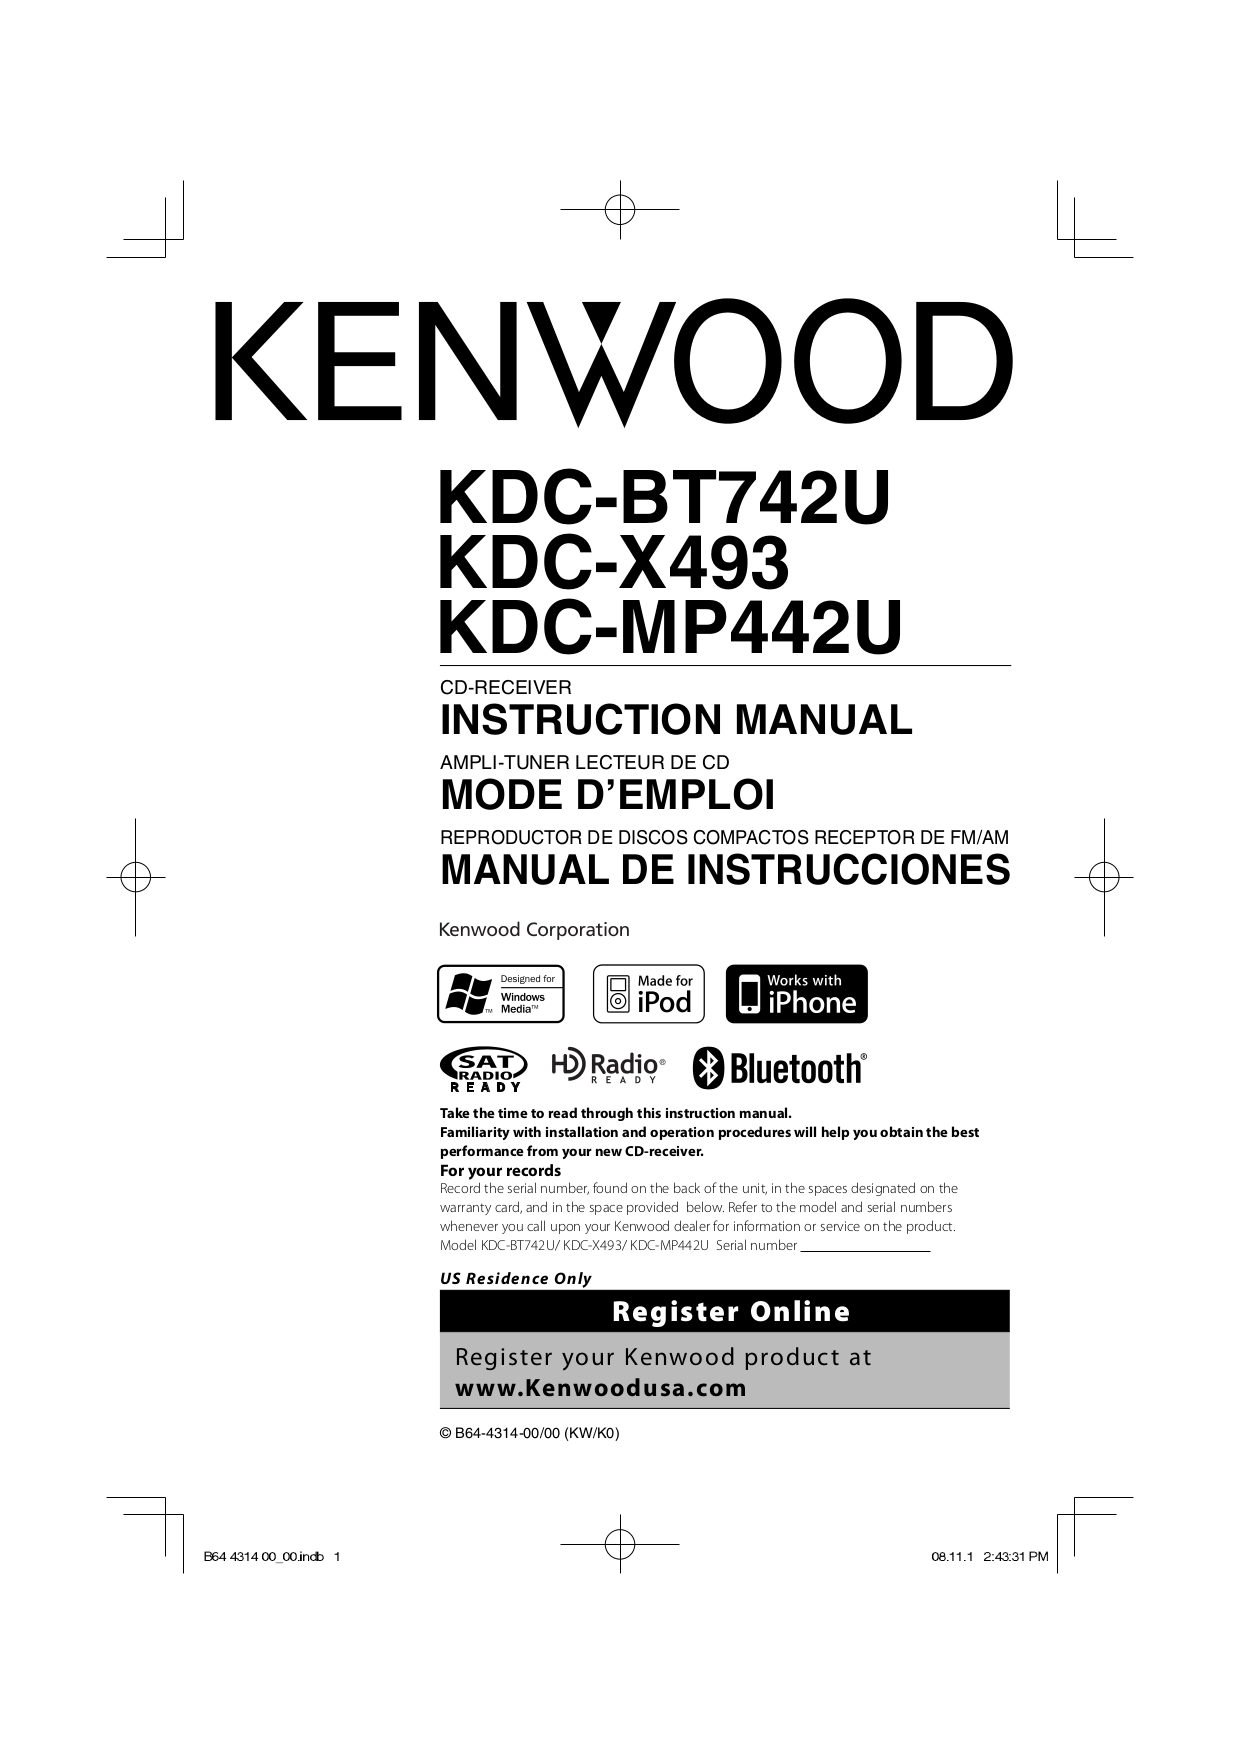 Kenwood kdc mp239 инструкция